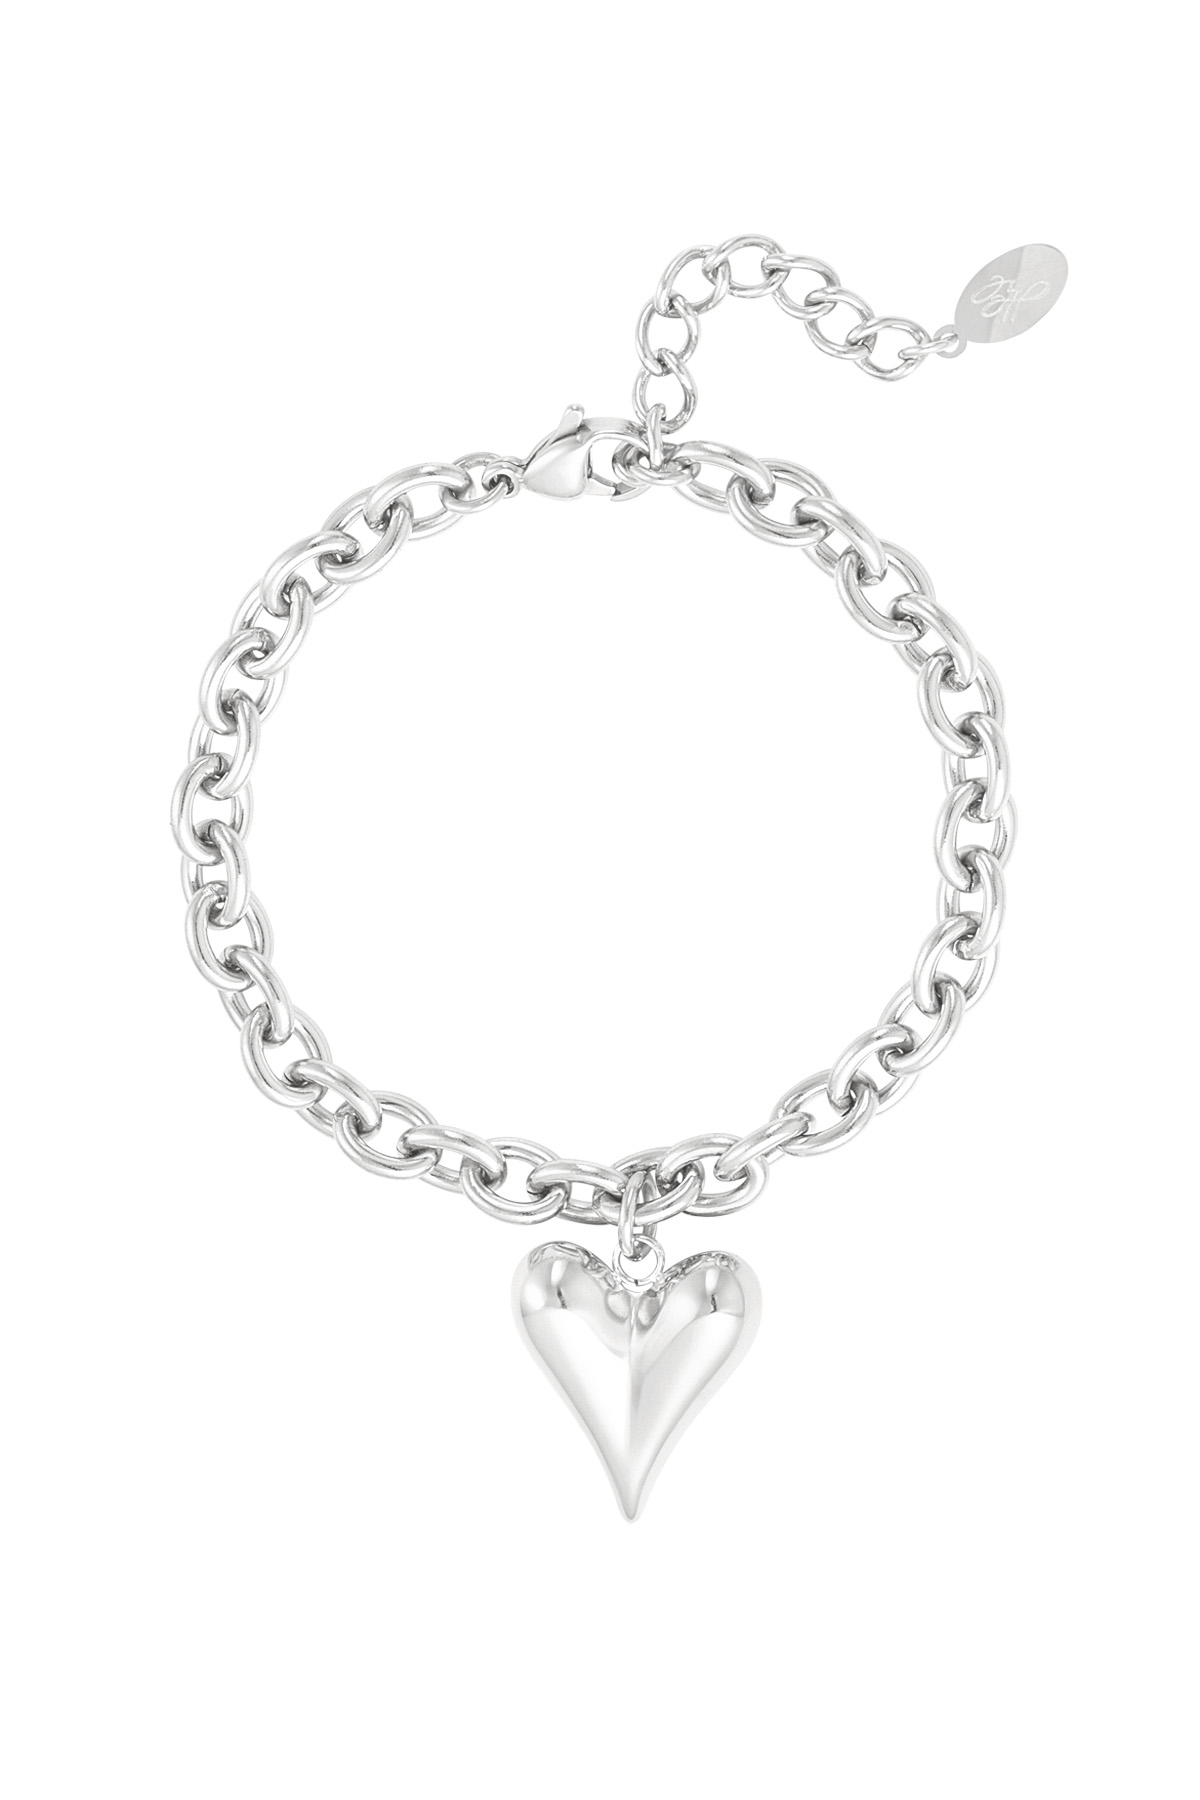 Bracelet love rules - silver h5 